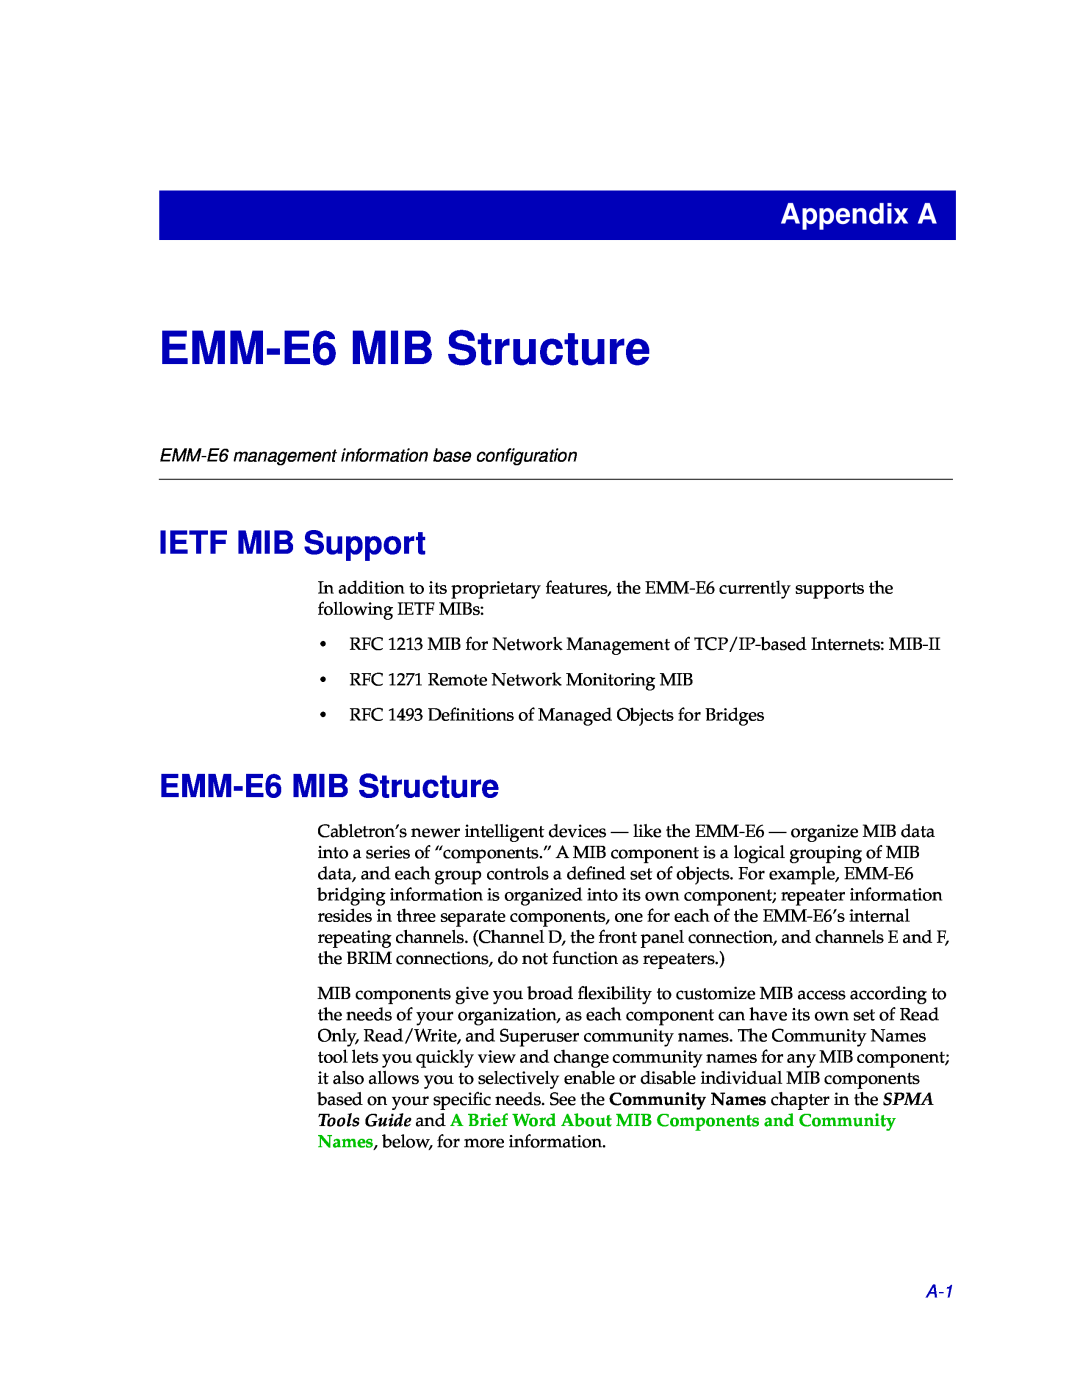 Cabletron Systems EMM-E6 MIB Structure, IETF MIB Support, Appendix A, EMM-E6 management information base conﬁguration 